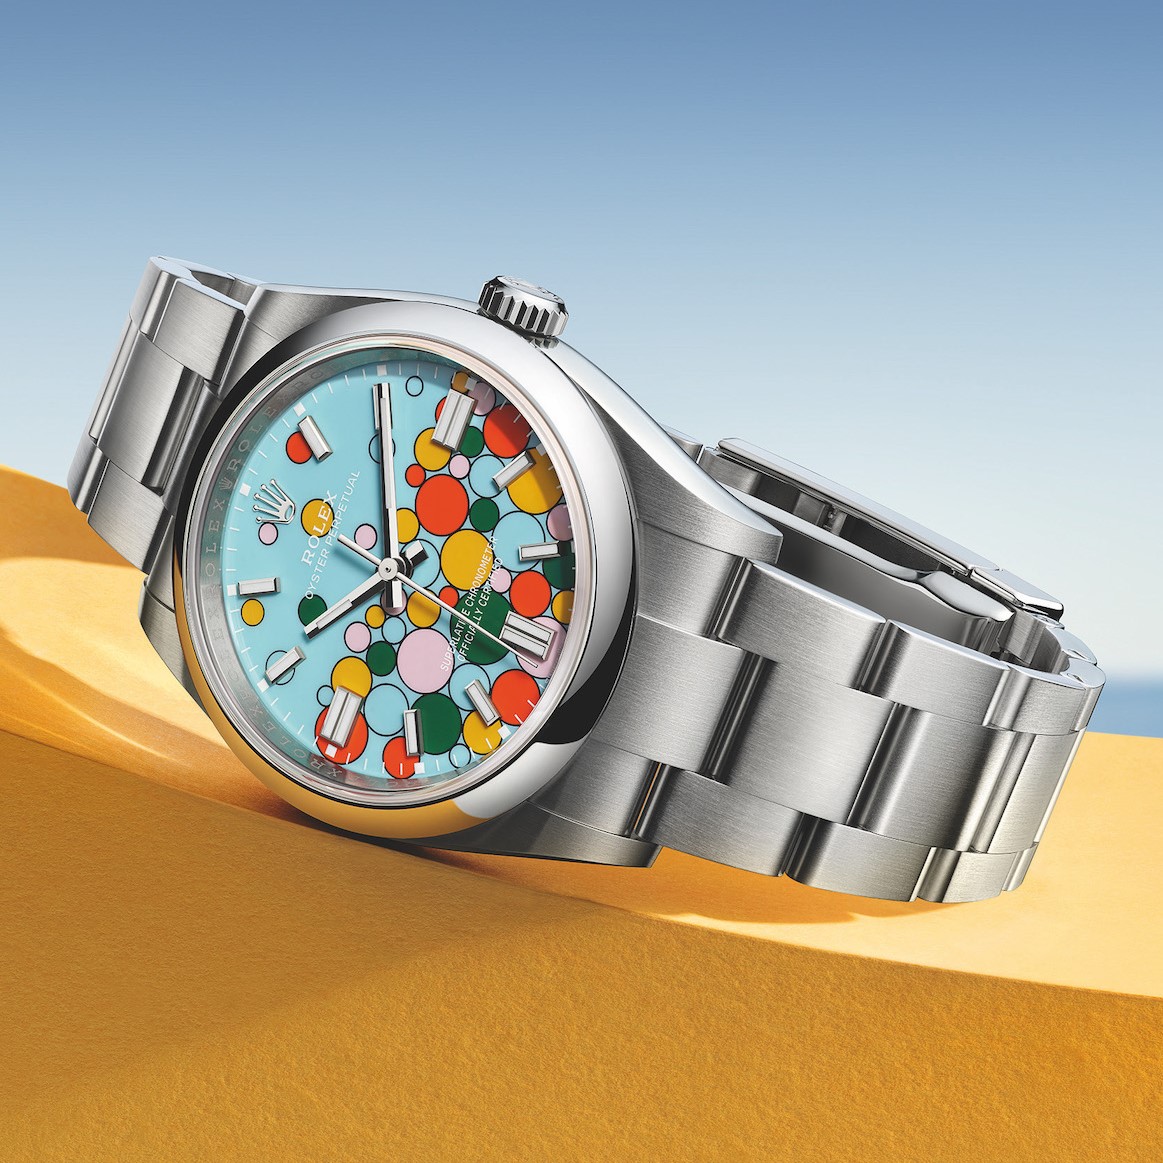 Đồng hồ Rolex Oyster Perpetual mặt số Celebration